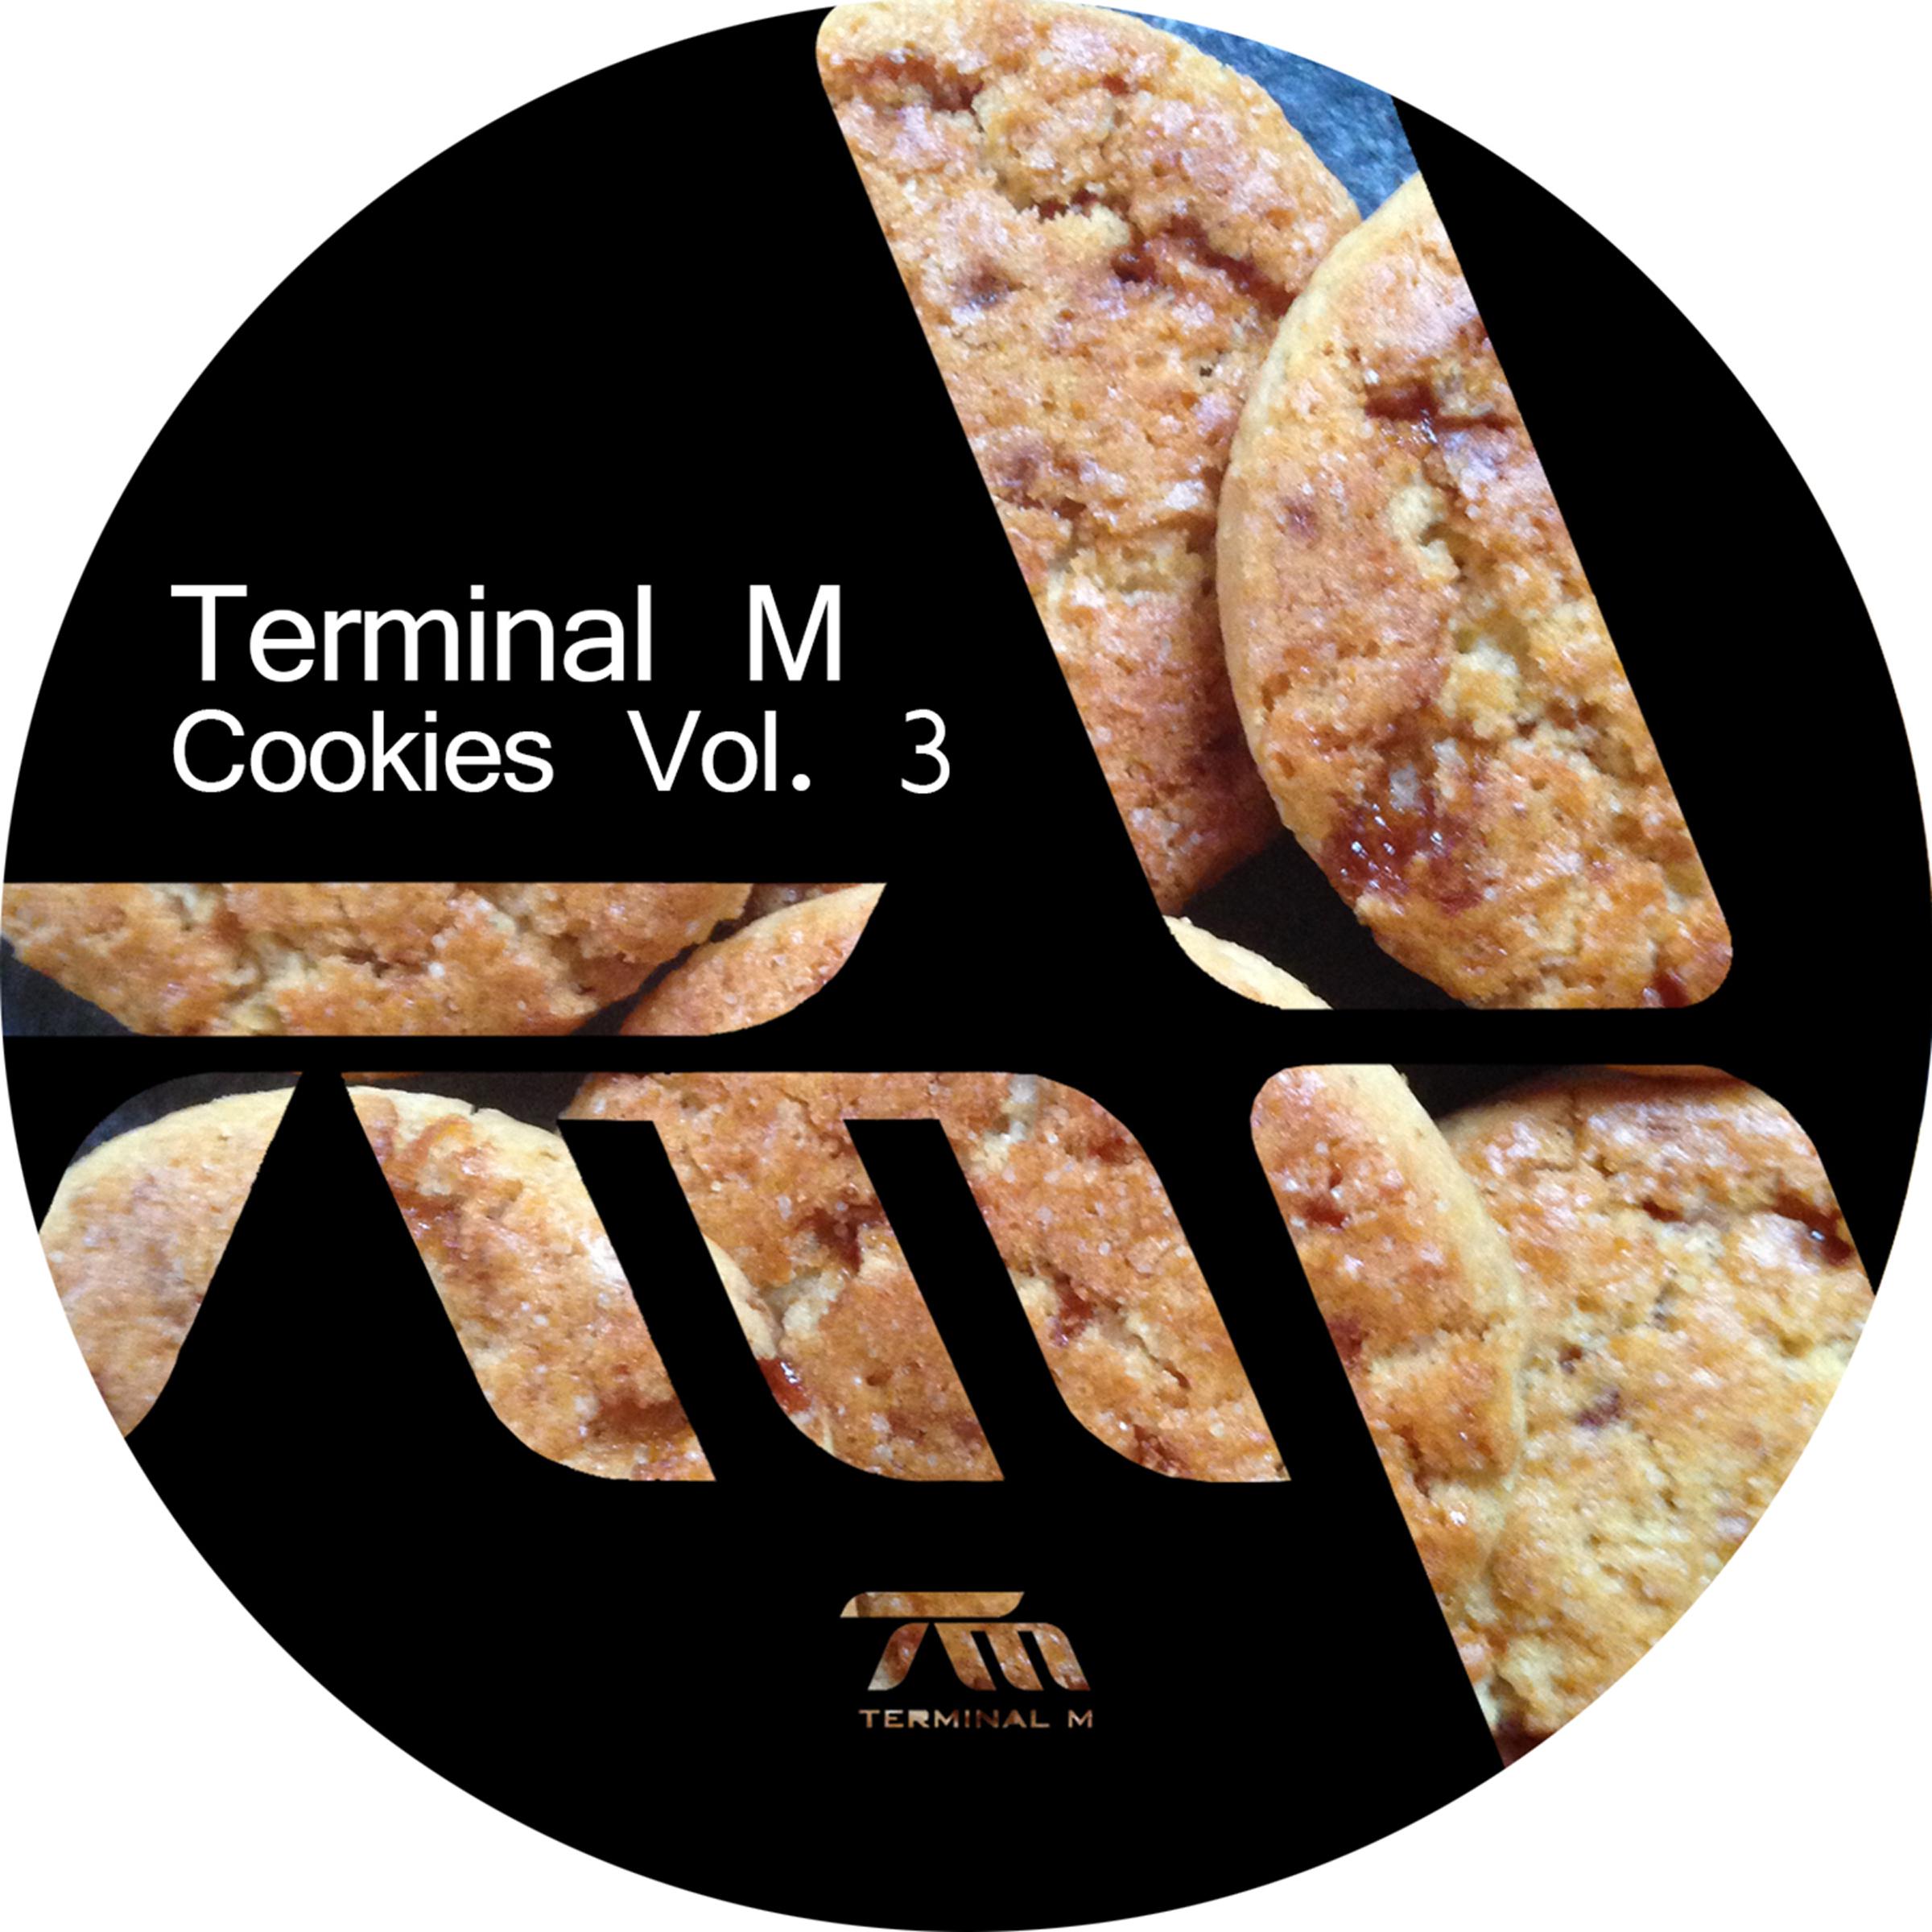 Terminal M Cookies, Vol. 3